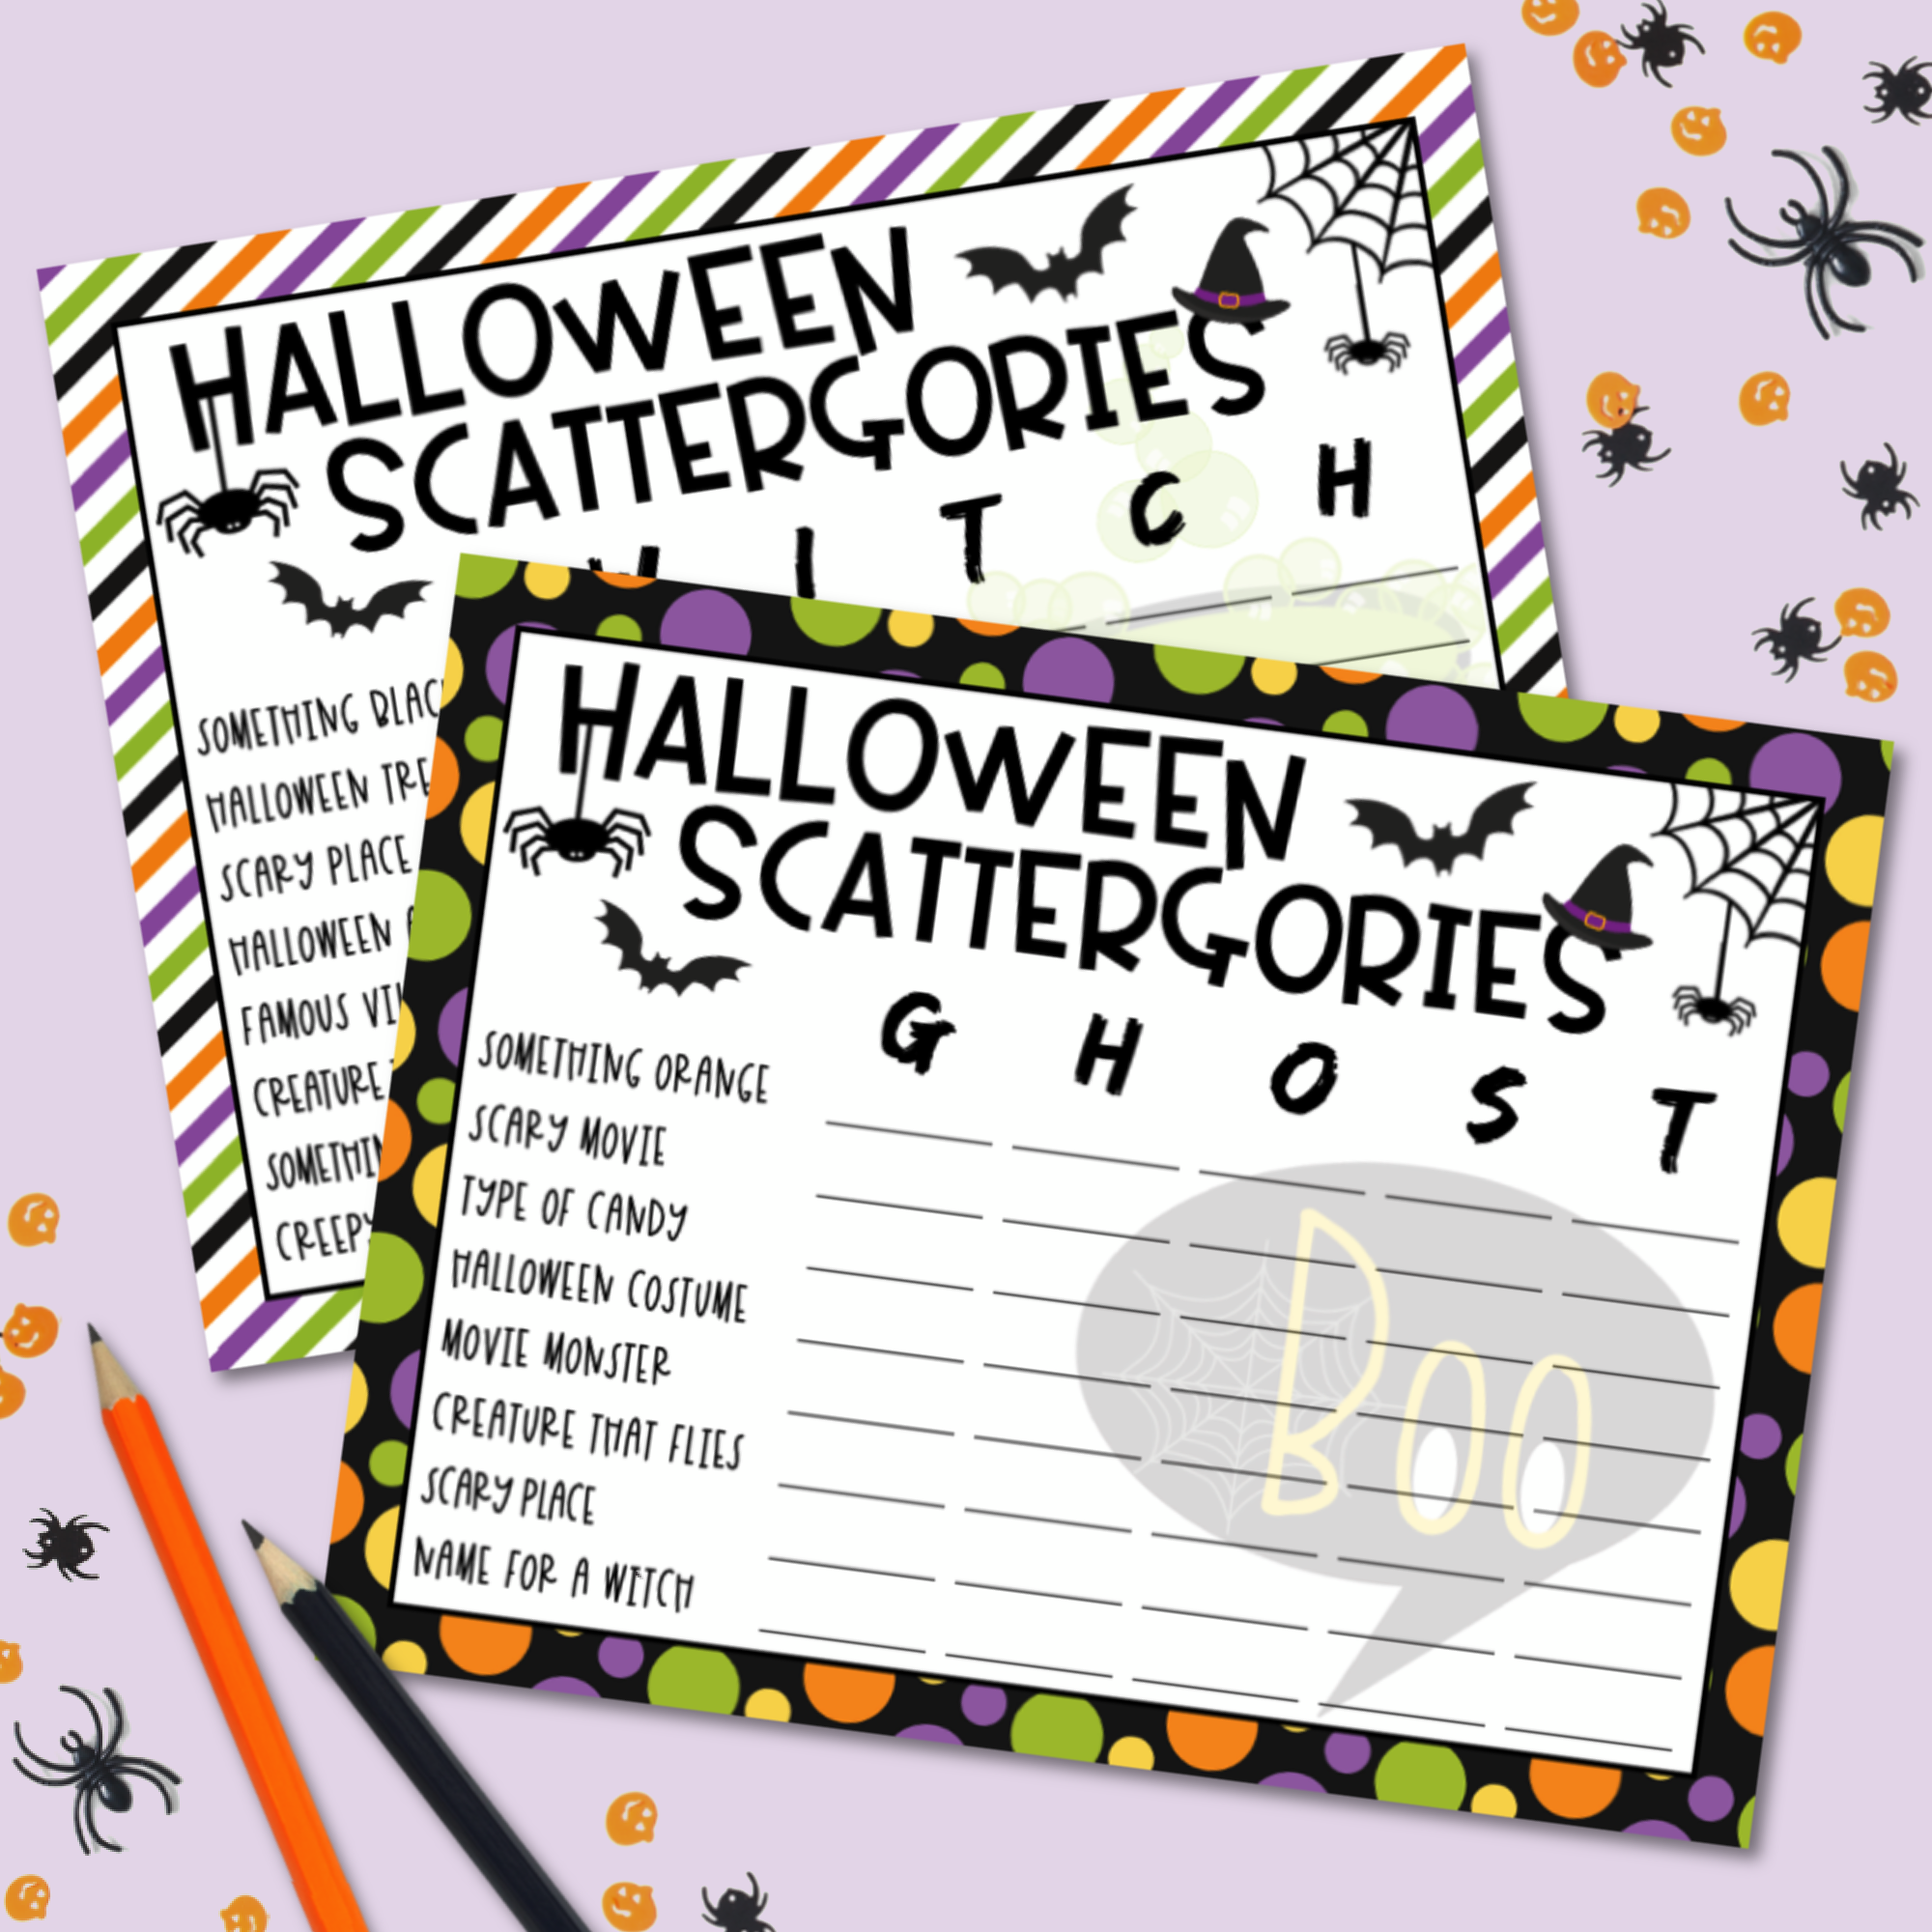 https://www.happygoluckyblog.com/wp-content/uploads/2020/09/Halloween-Scattergories-Free-Printable-Game.png